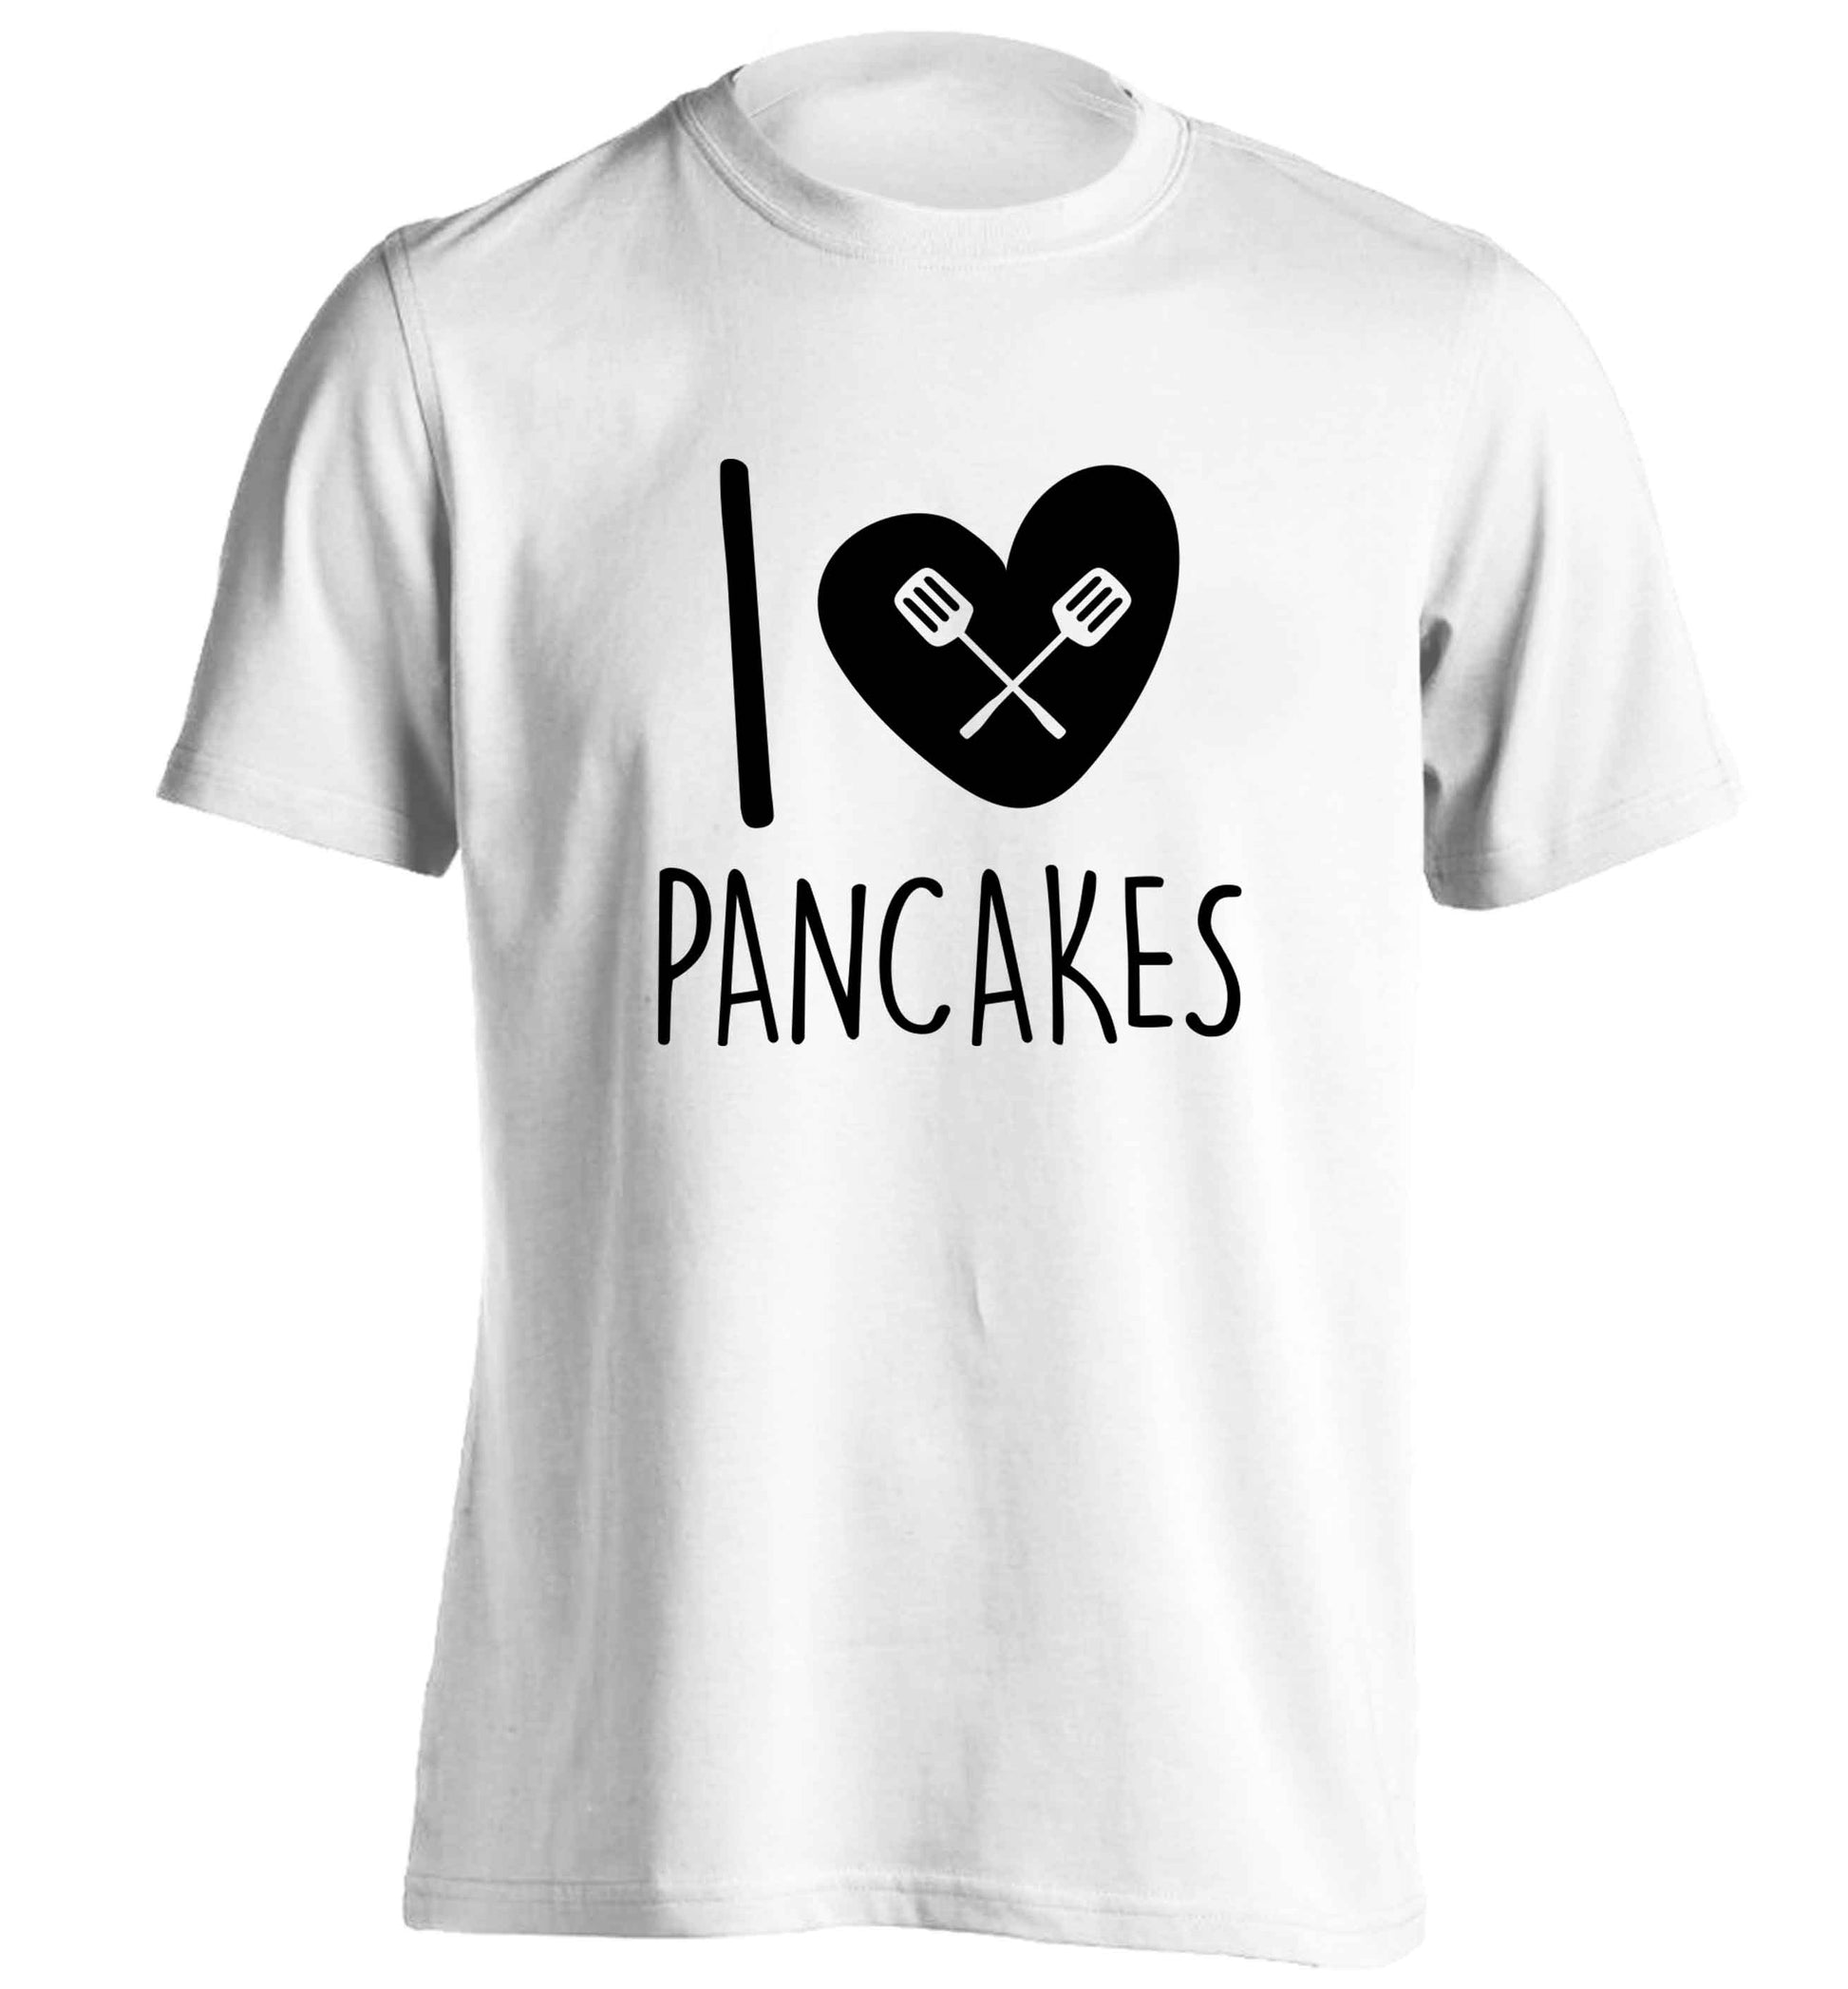 I love pancakes adults unisex white Tshirt 2XL